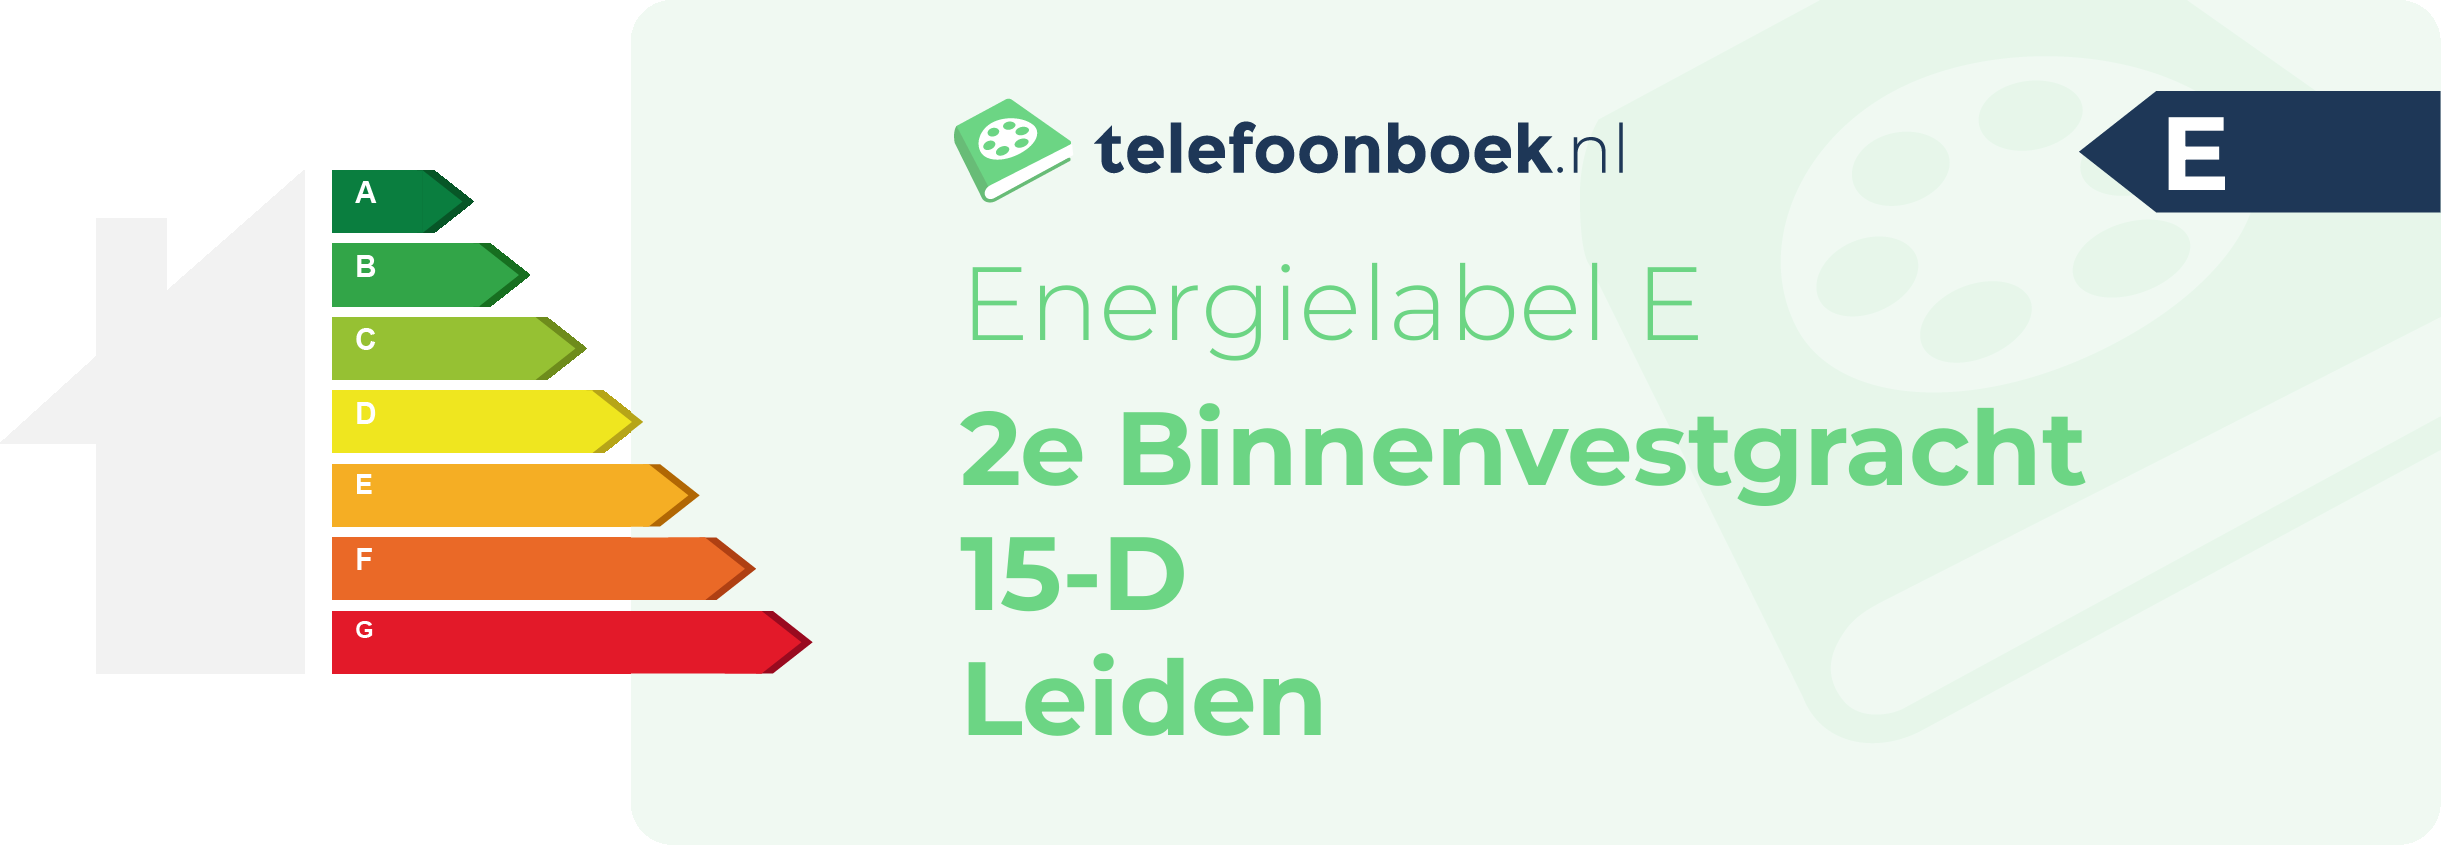 Energielabel 2e Binnenvestgracht 15-D Leiden